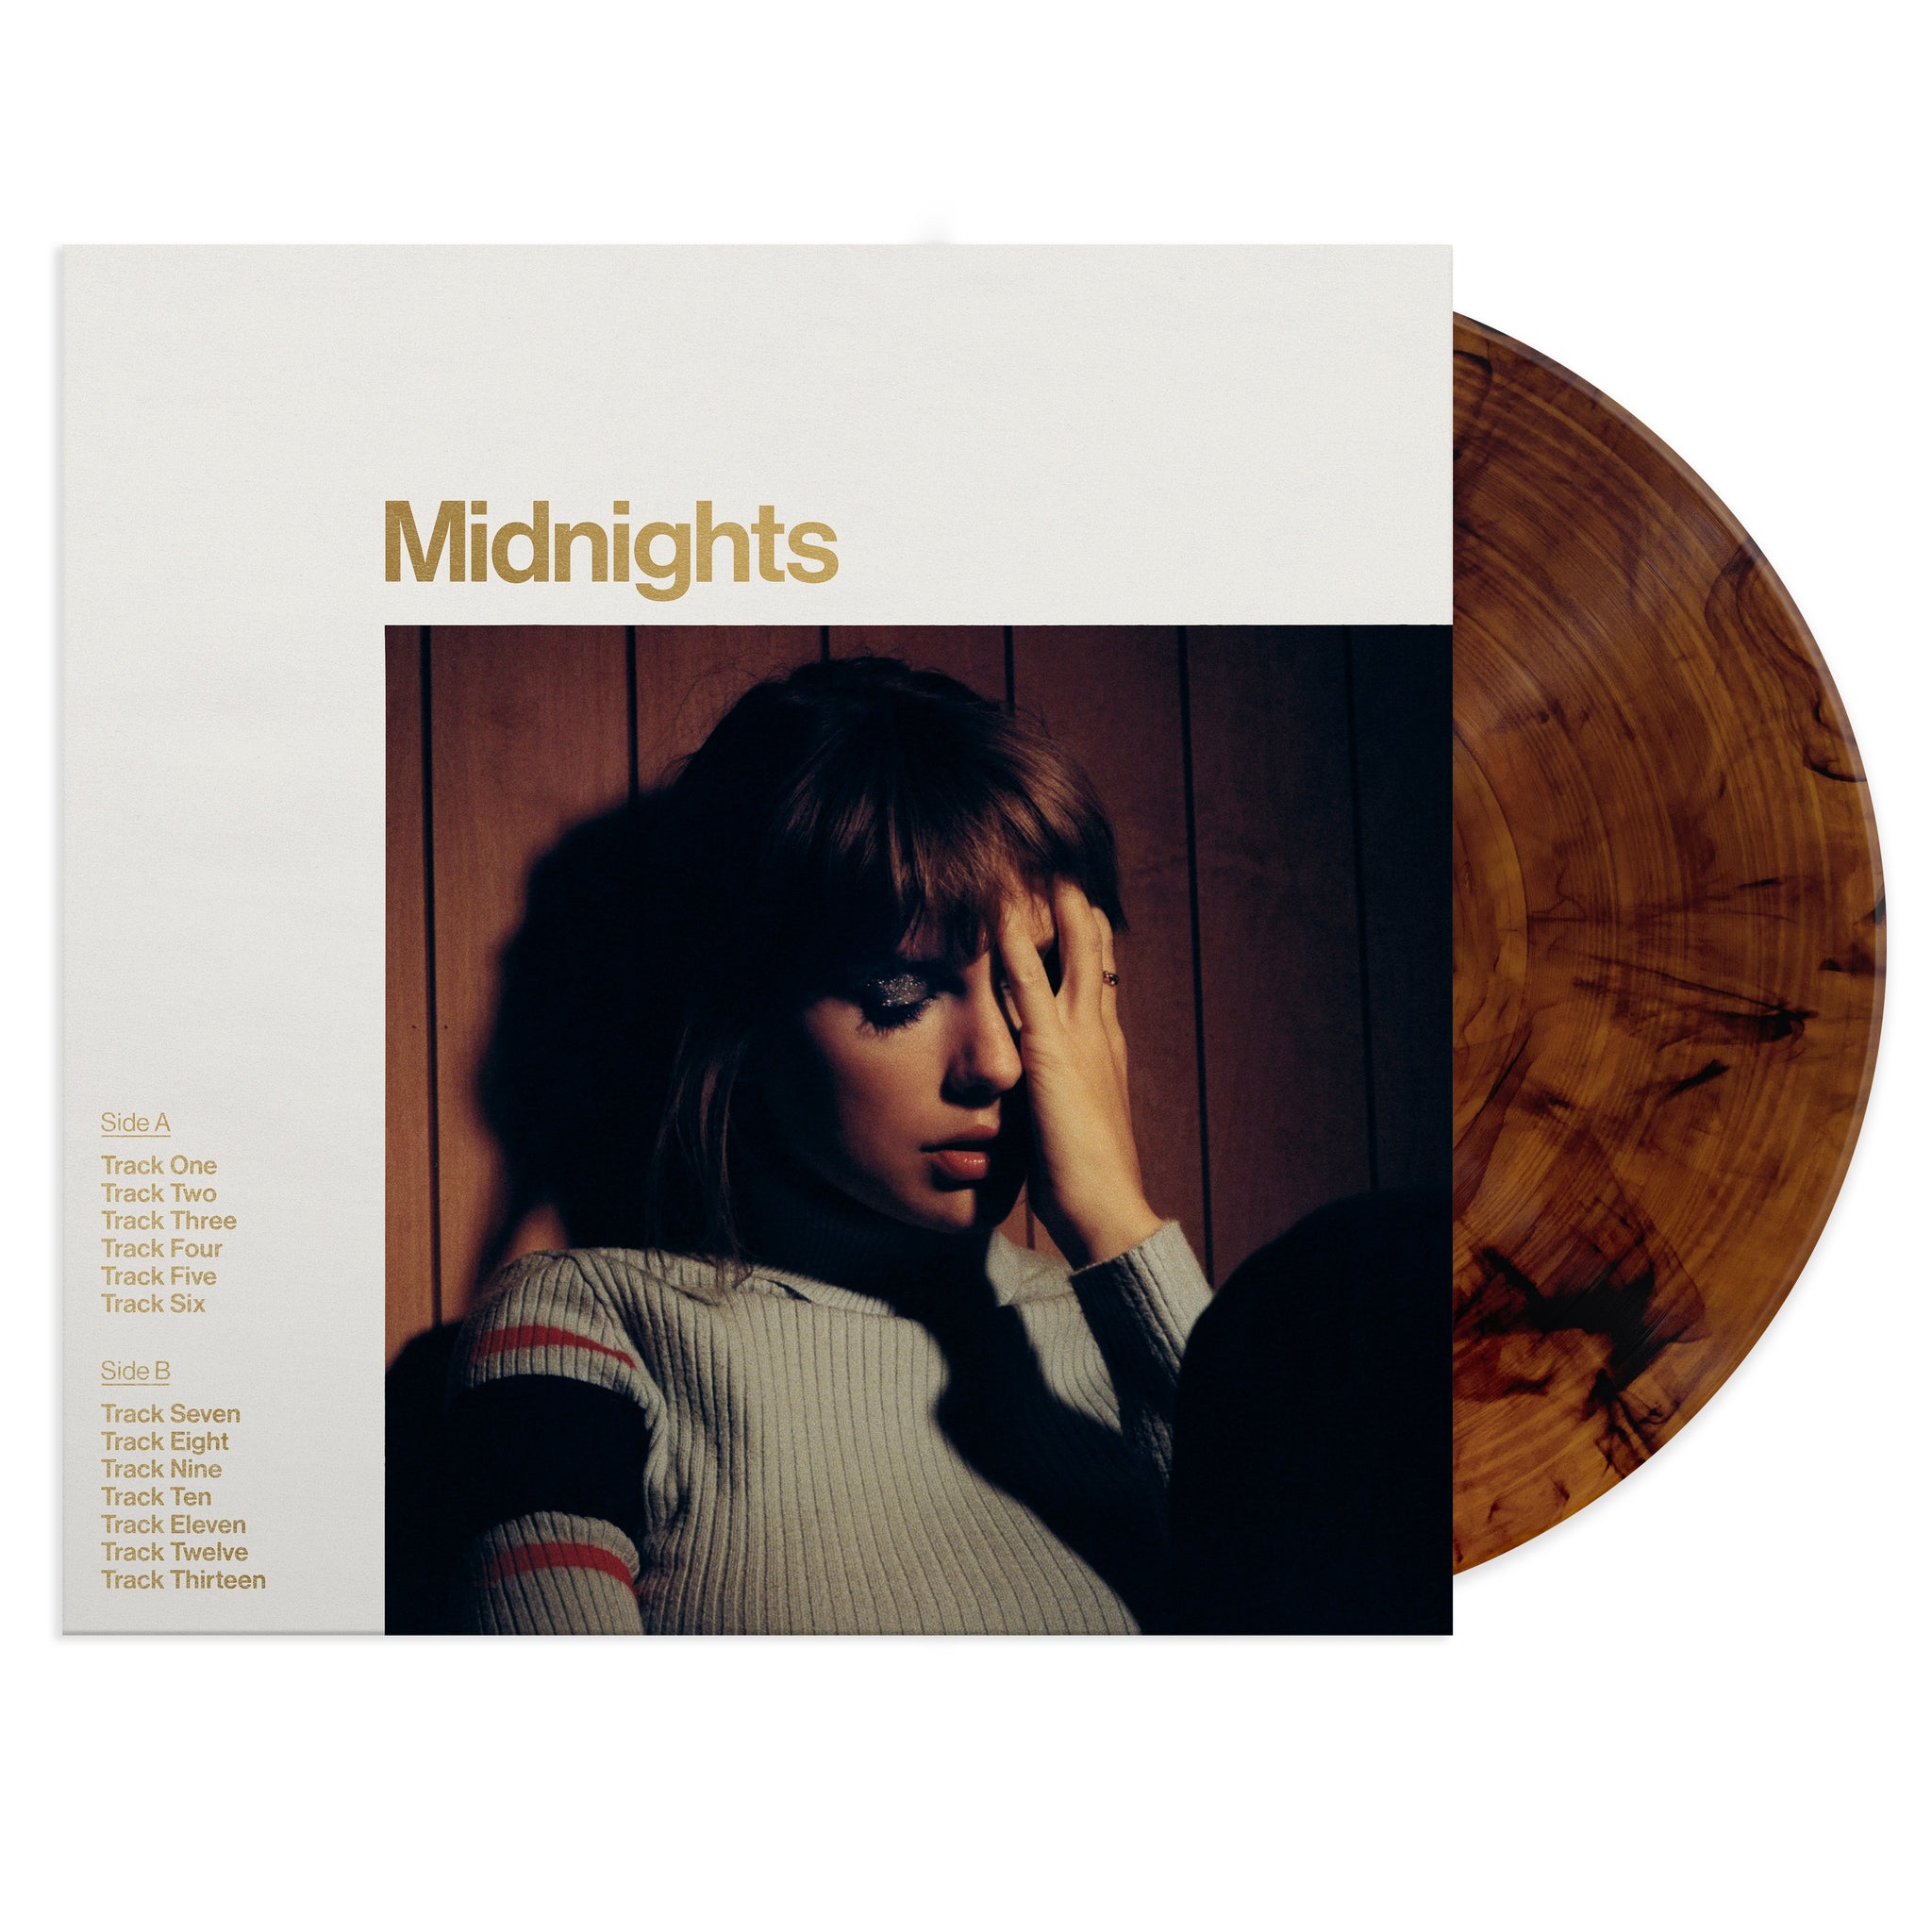 Taylor Swift Midnights Backpack - Orange & Blue In Hand Brand New Midnight  Album